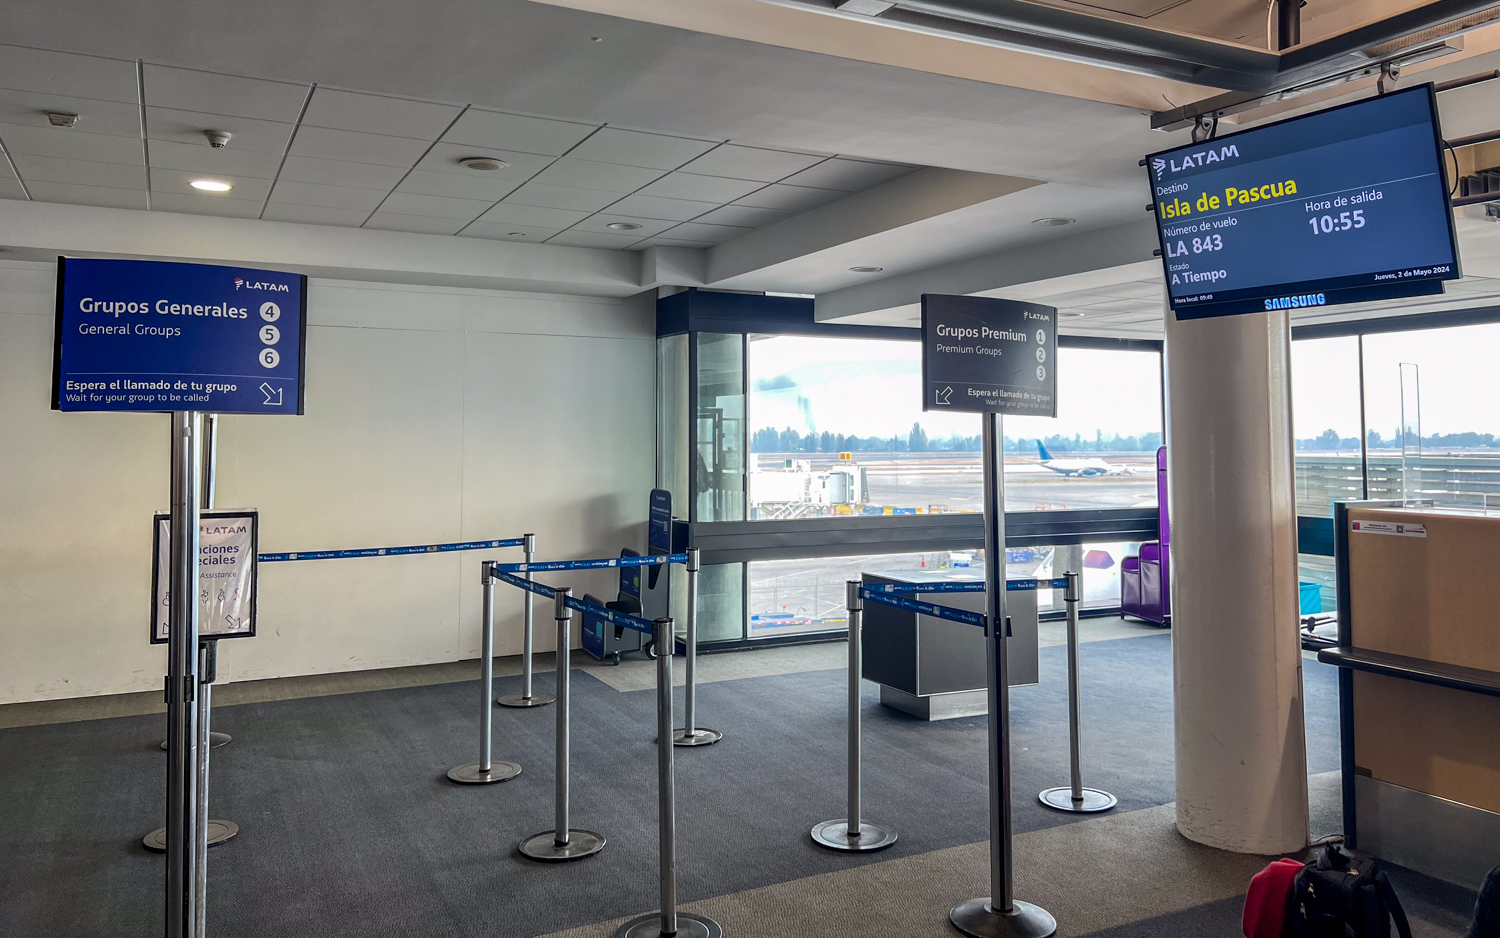 LATAM boarding gate 16 at Arturo Merino Benitez International Airport in Santiago, Chile.